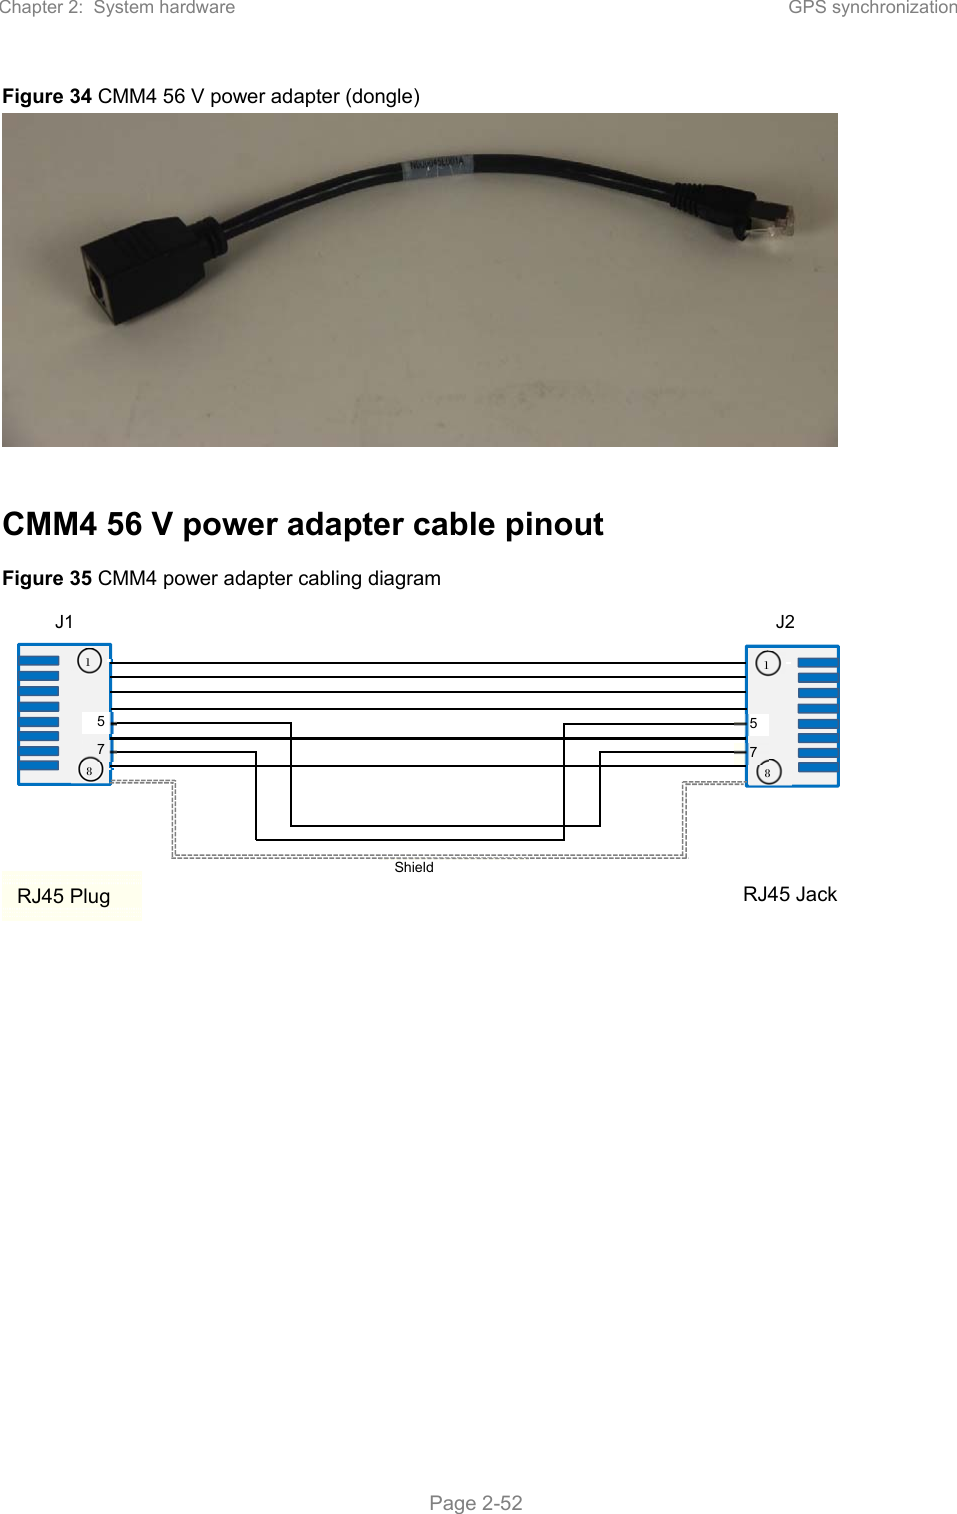 Chapter 2:  System hardware  GPS synchronization   Page 2-52 Figure 34 CMM4 56 V power adapter (dongle)   CMM4 56 V power adapter cable pinout Figure 35 CMM4 power adapter cabling diagram  1 8 1 8 J1  J2 RJ45 Plug  RJ45 Jack 5 7 5 7 Shield 